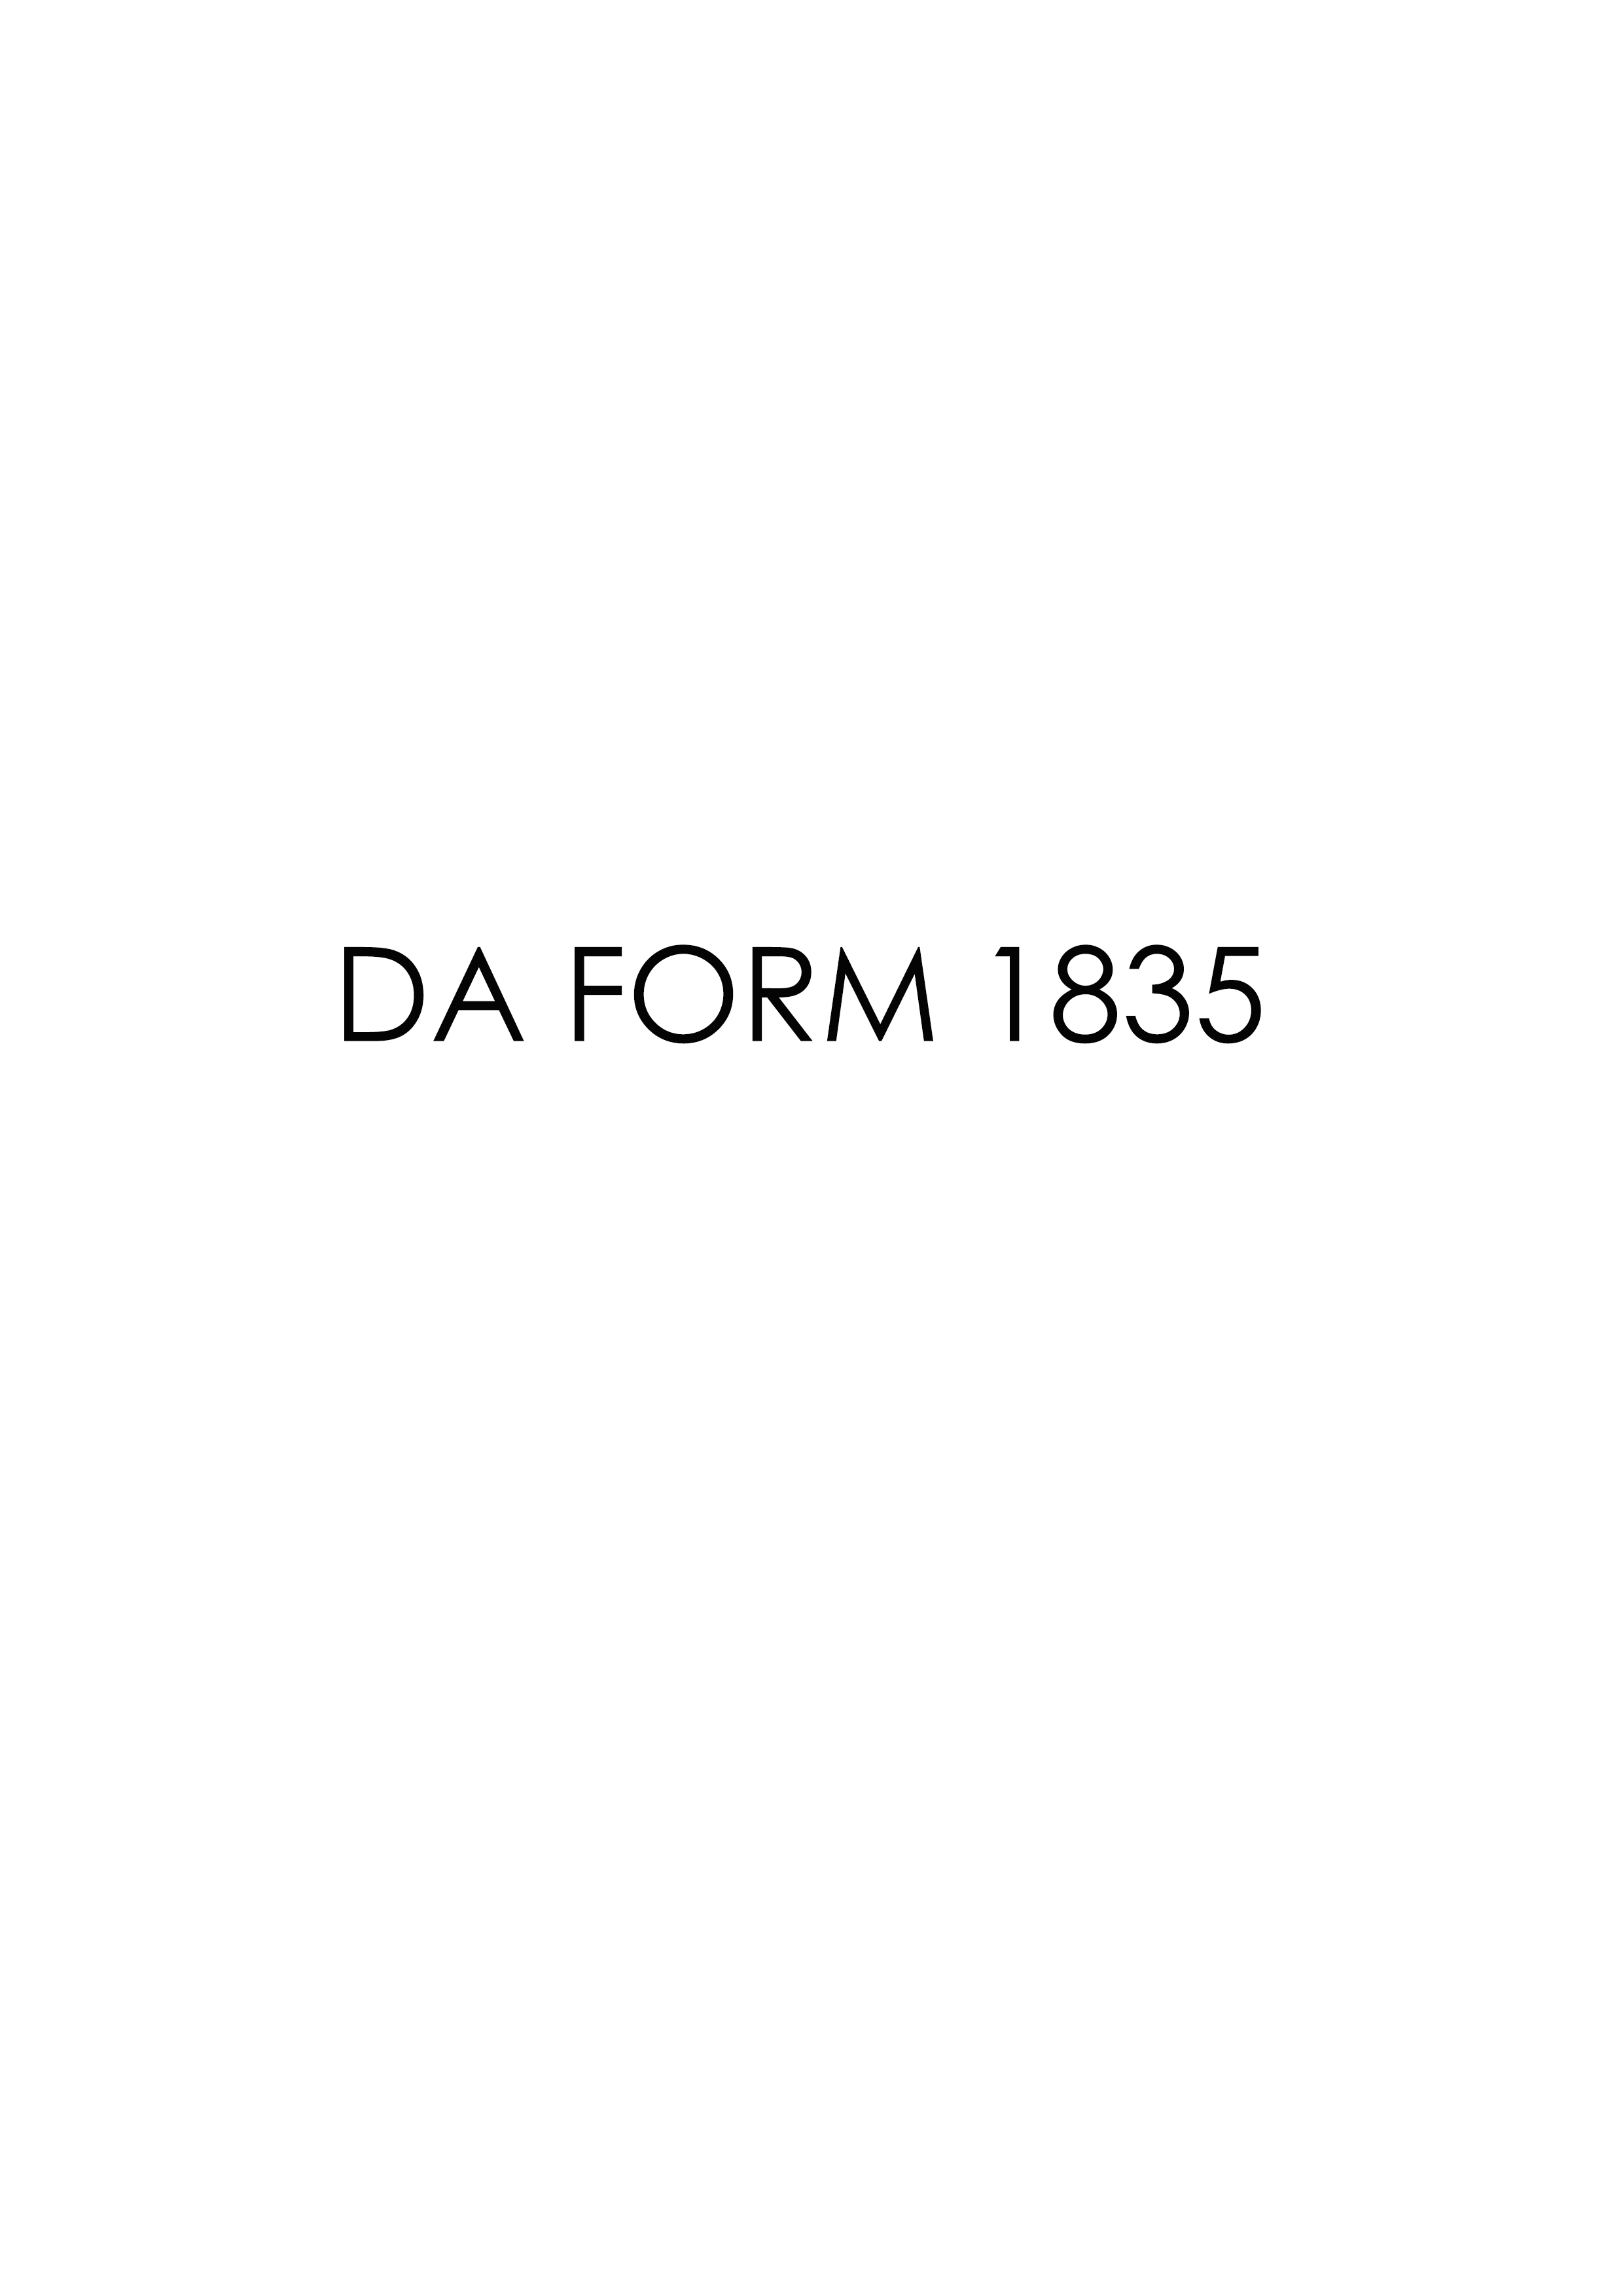 da Form 1835 fillable